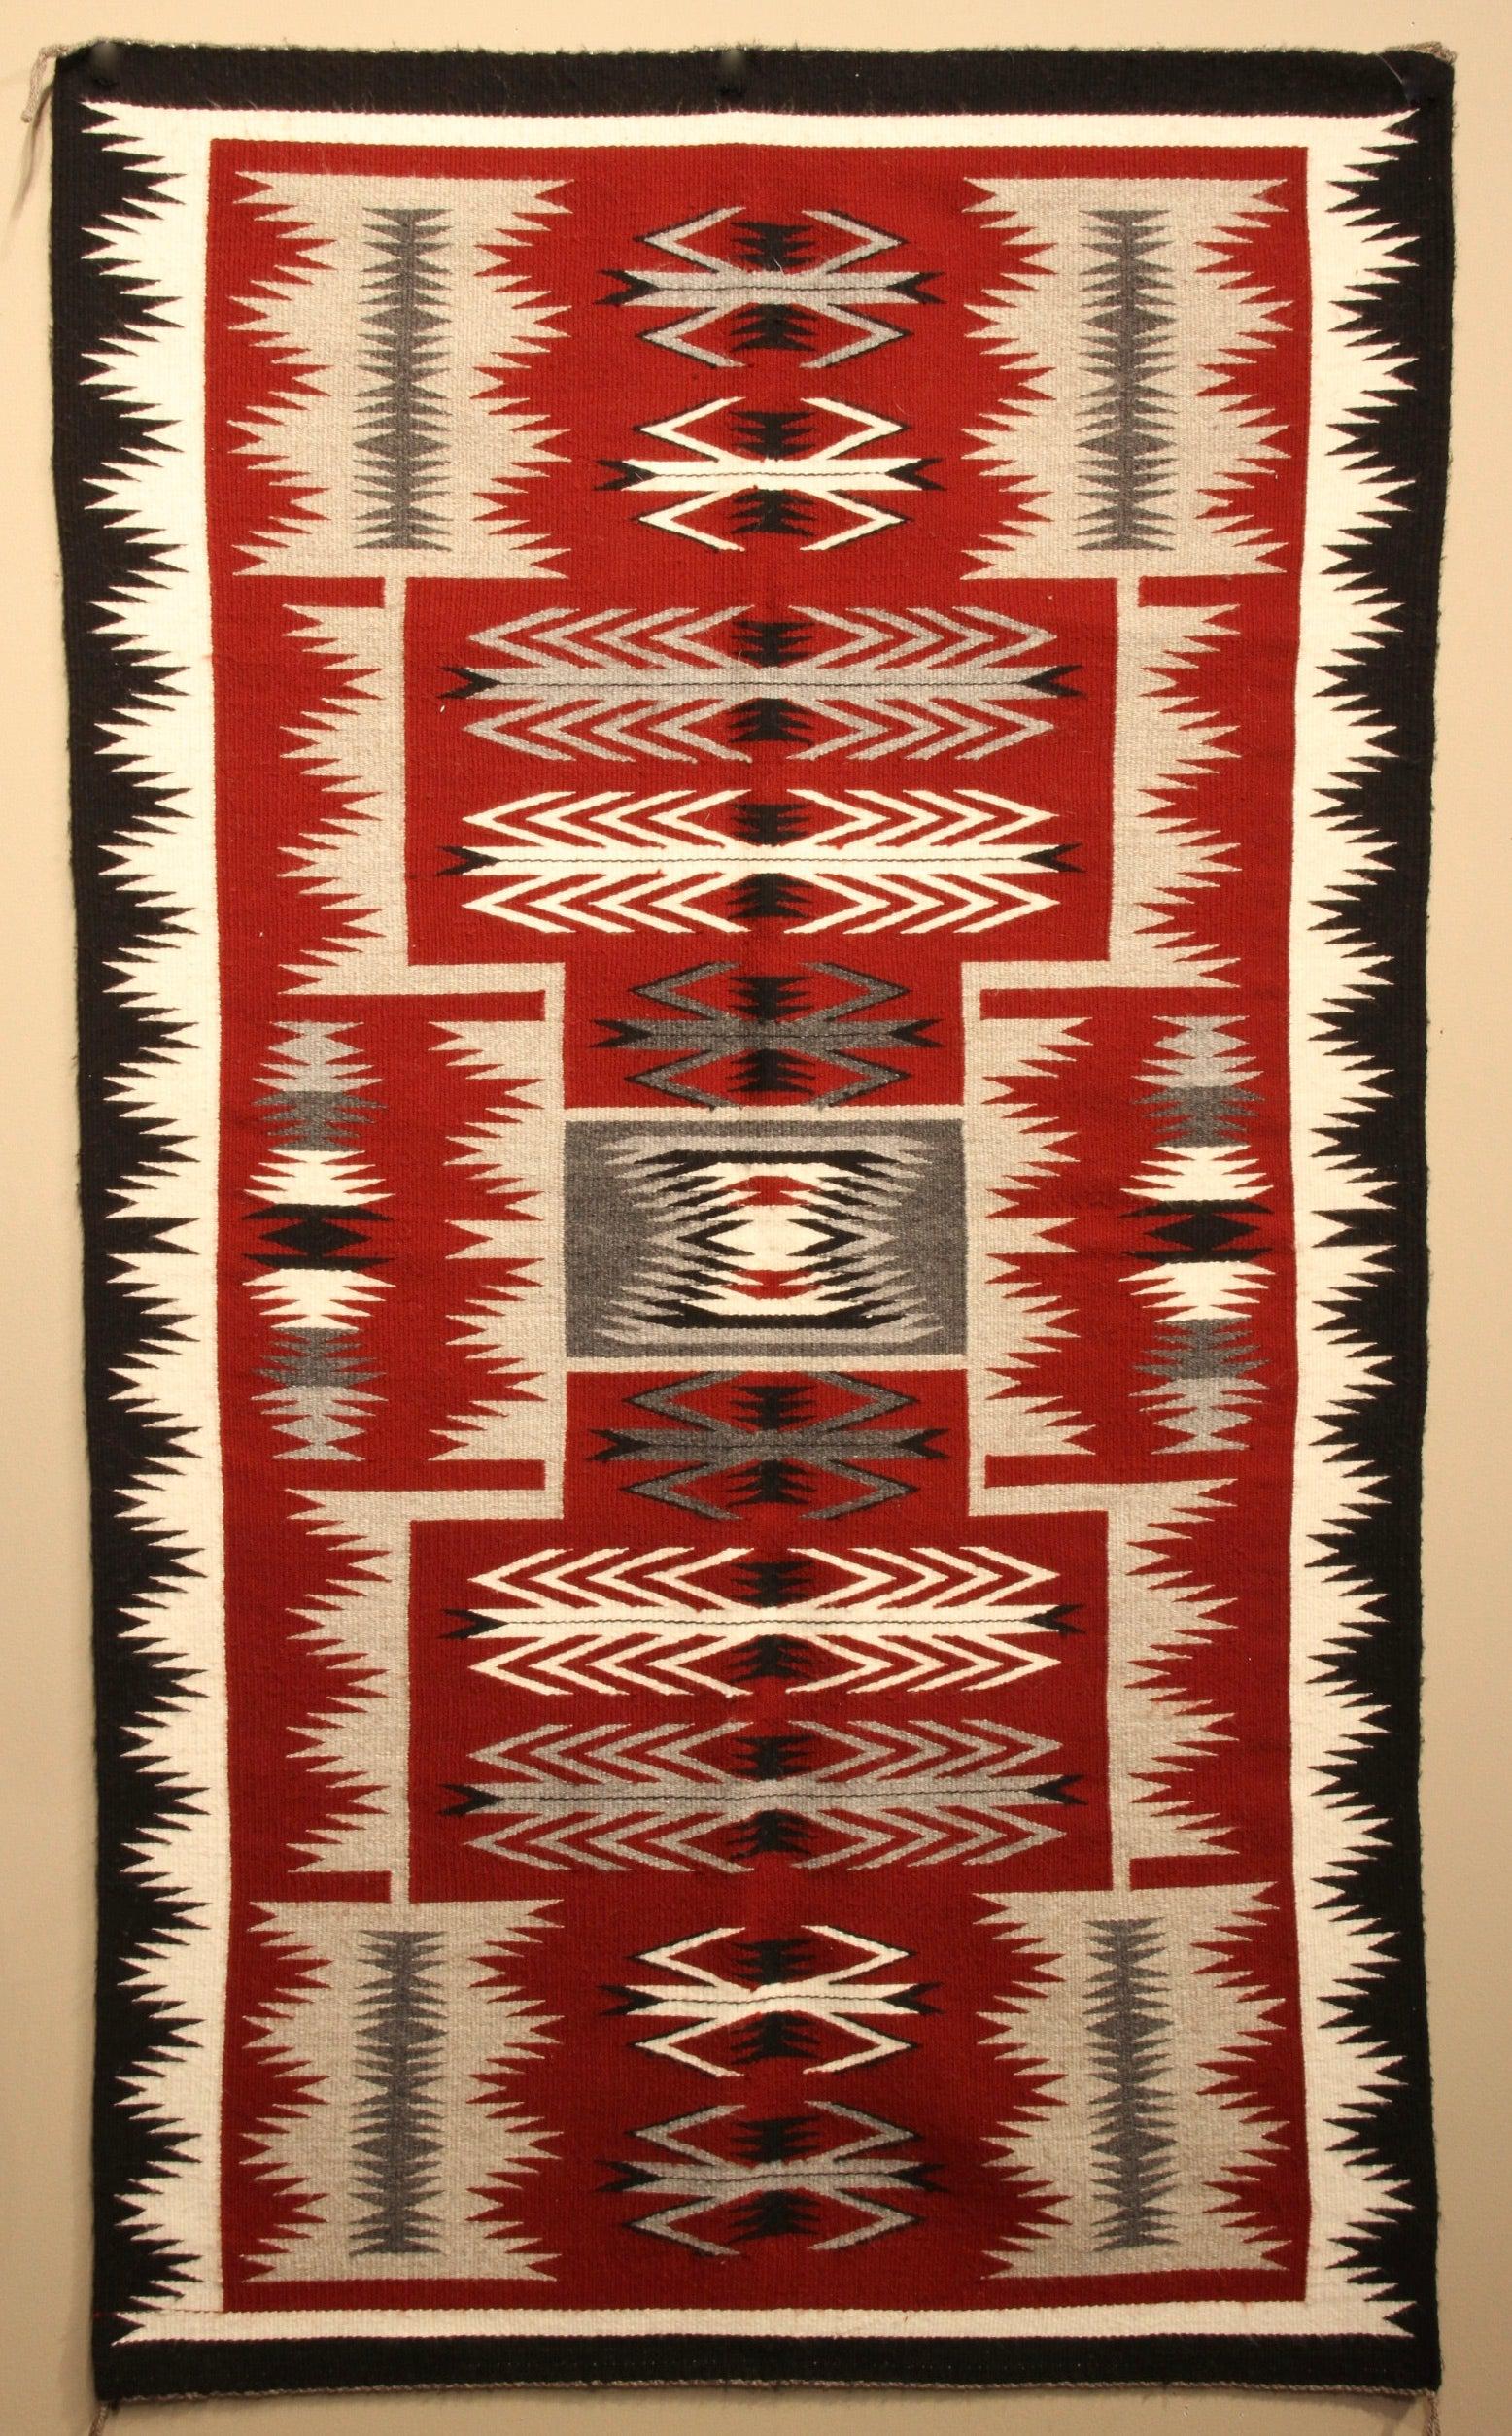 Storm by Weaver Anthony Tallboy-Weaving-Navajo Weaving-Sorrel Sky Gallery